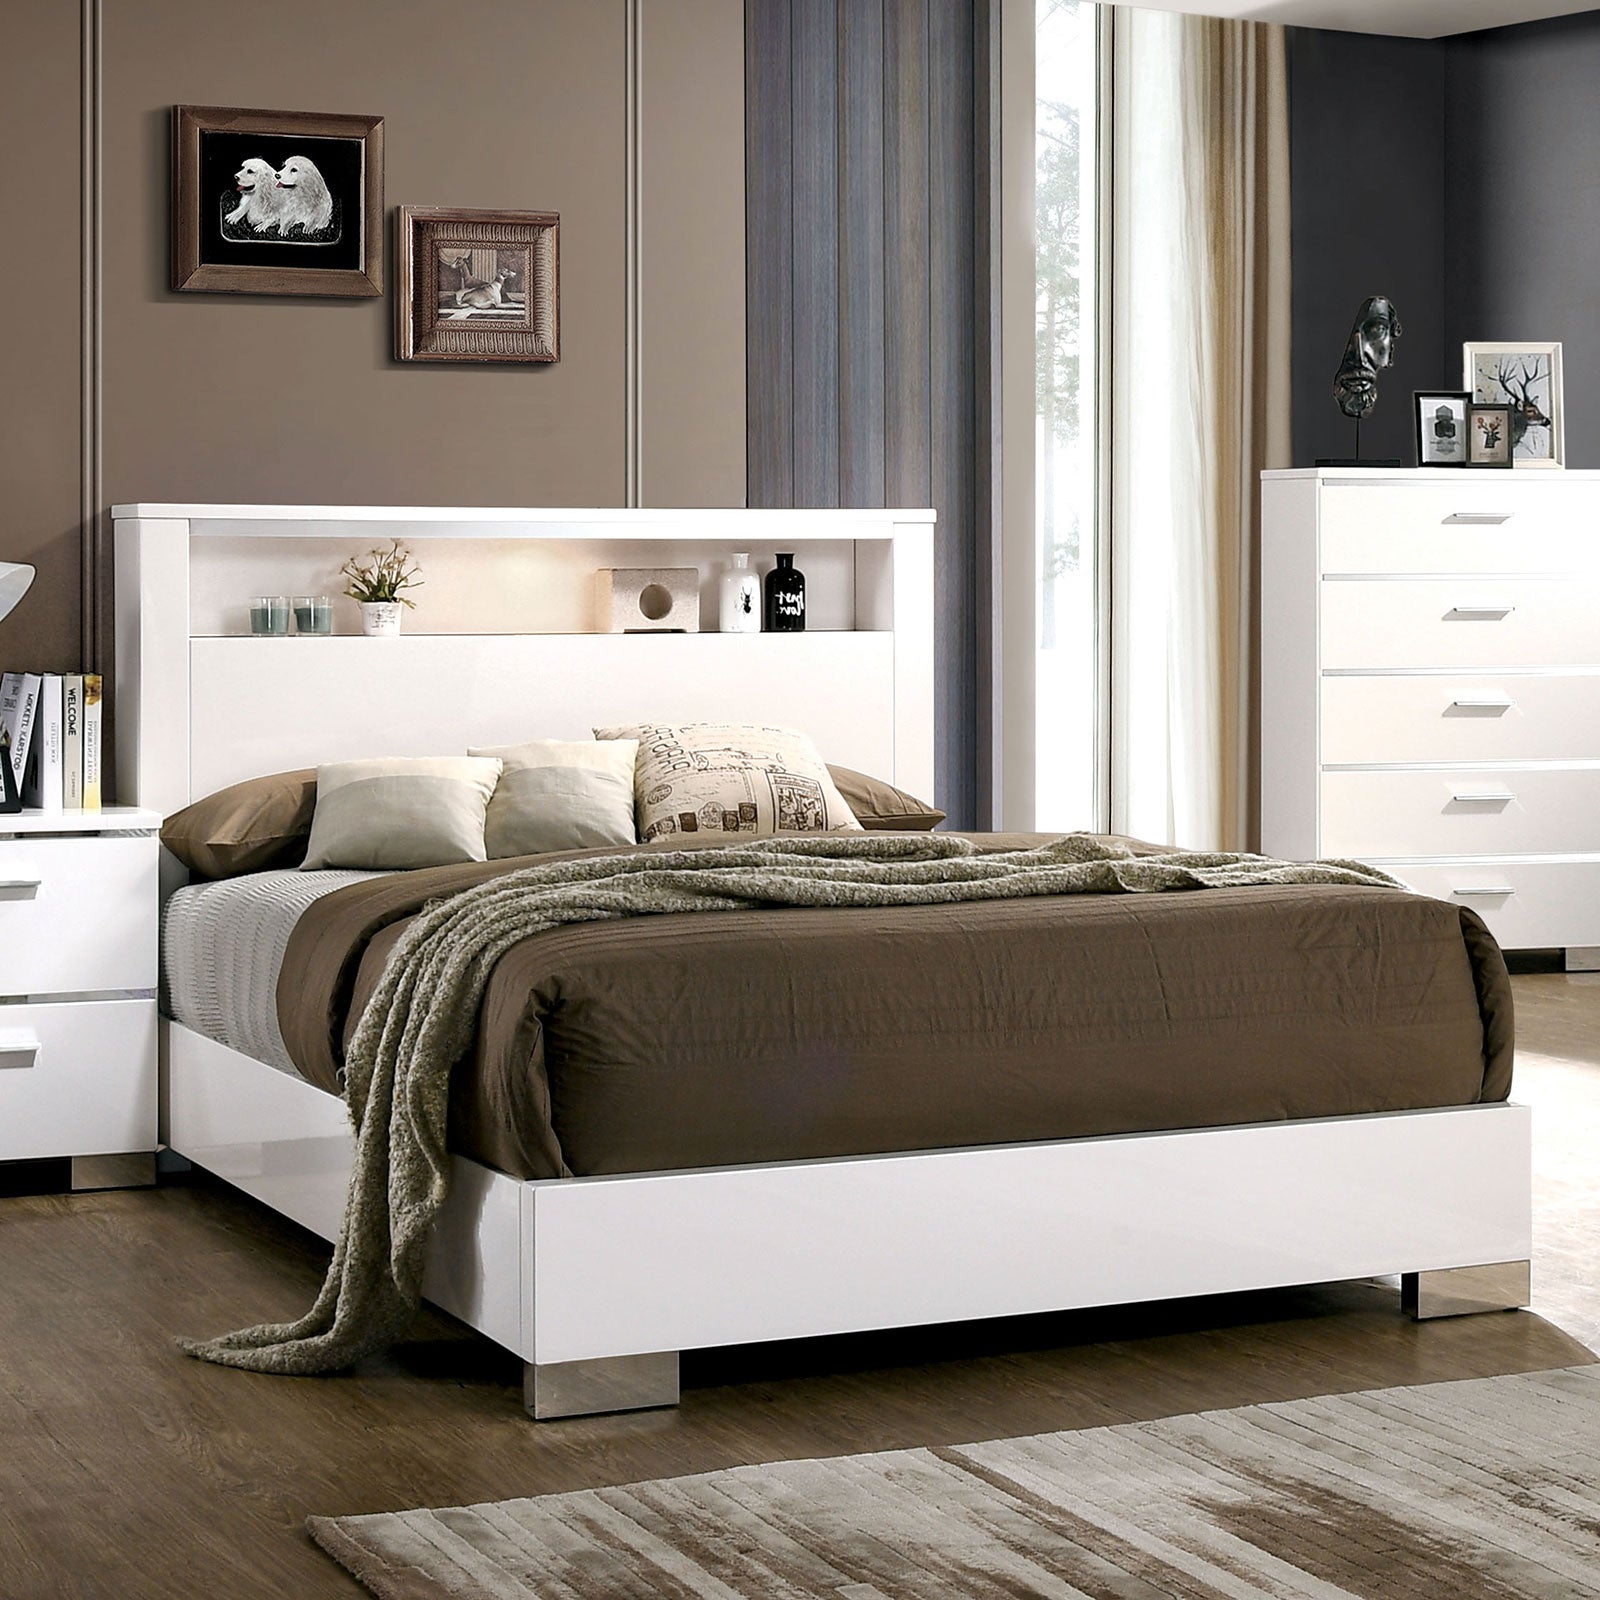 Malte White Queen Bed image